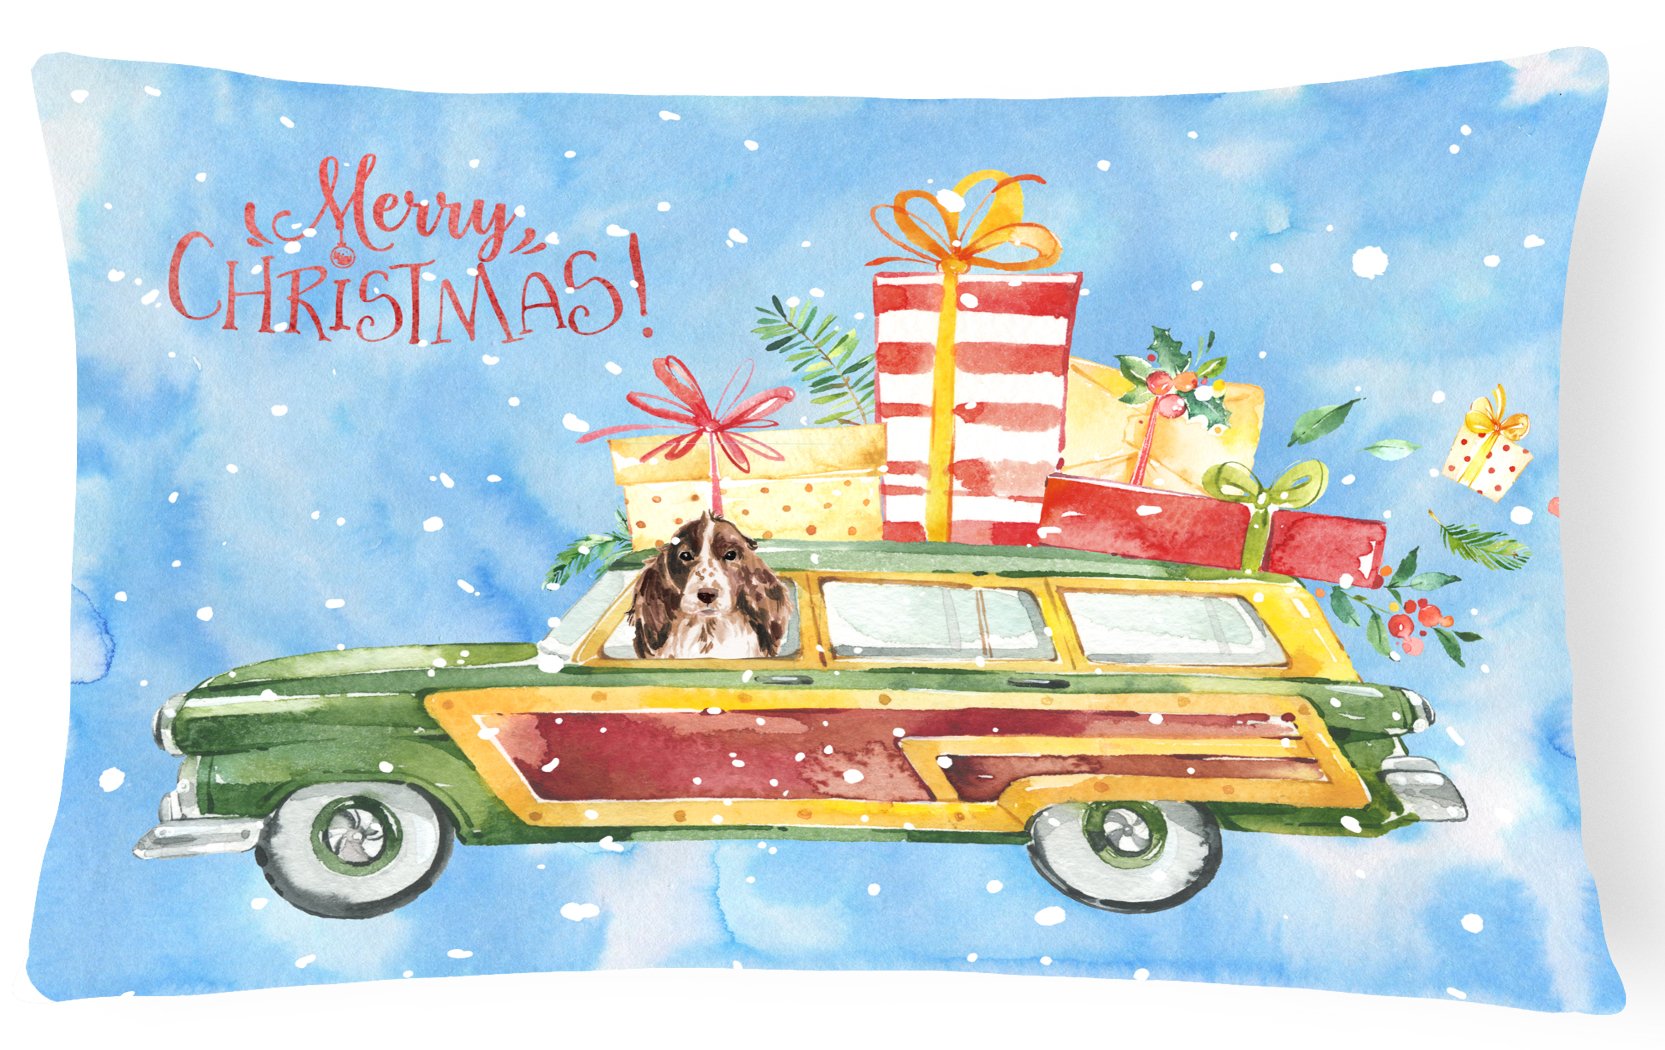 Merry Christmas Brown Parti Cocker Spaniel Canvas Fabric Decorative Pillow CK2447PW1216 by Caroline's Treasures